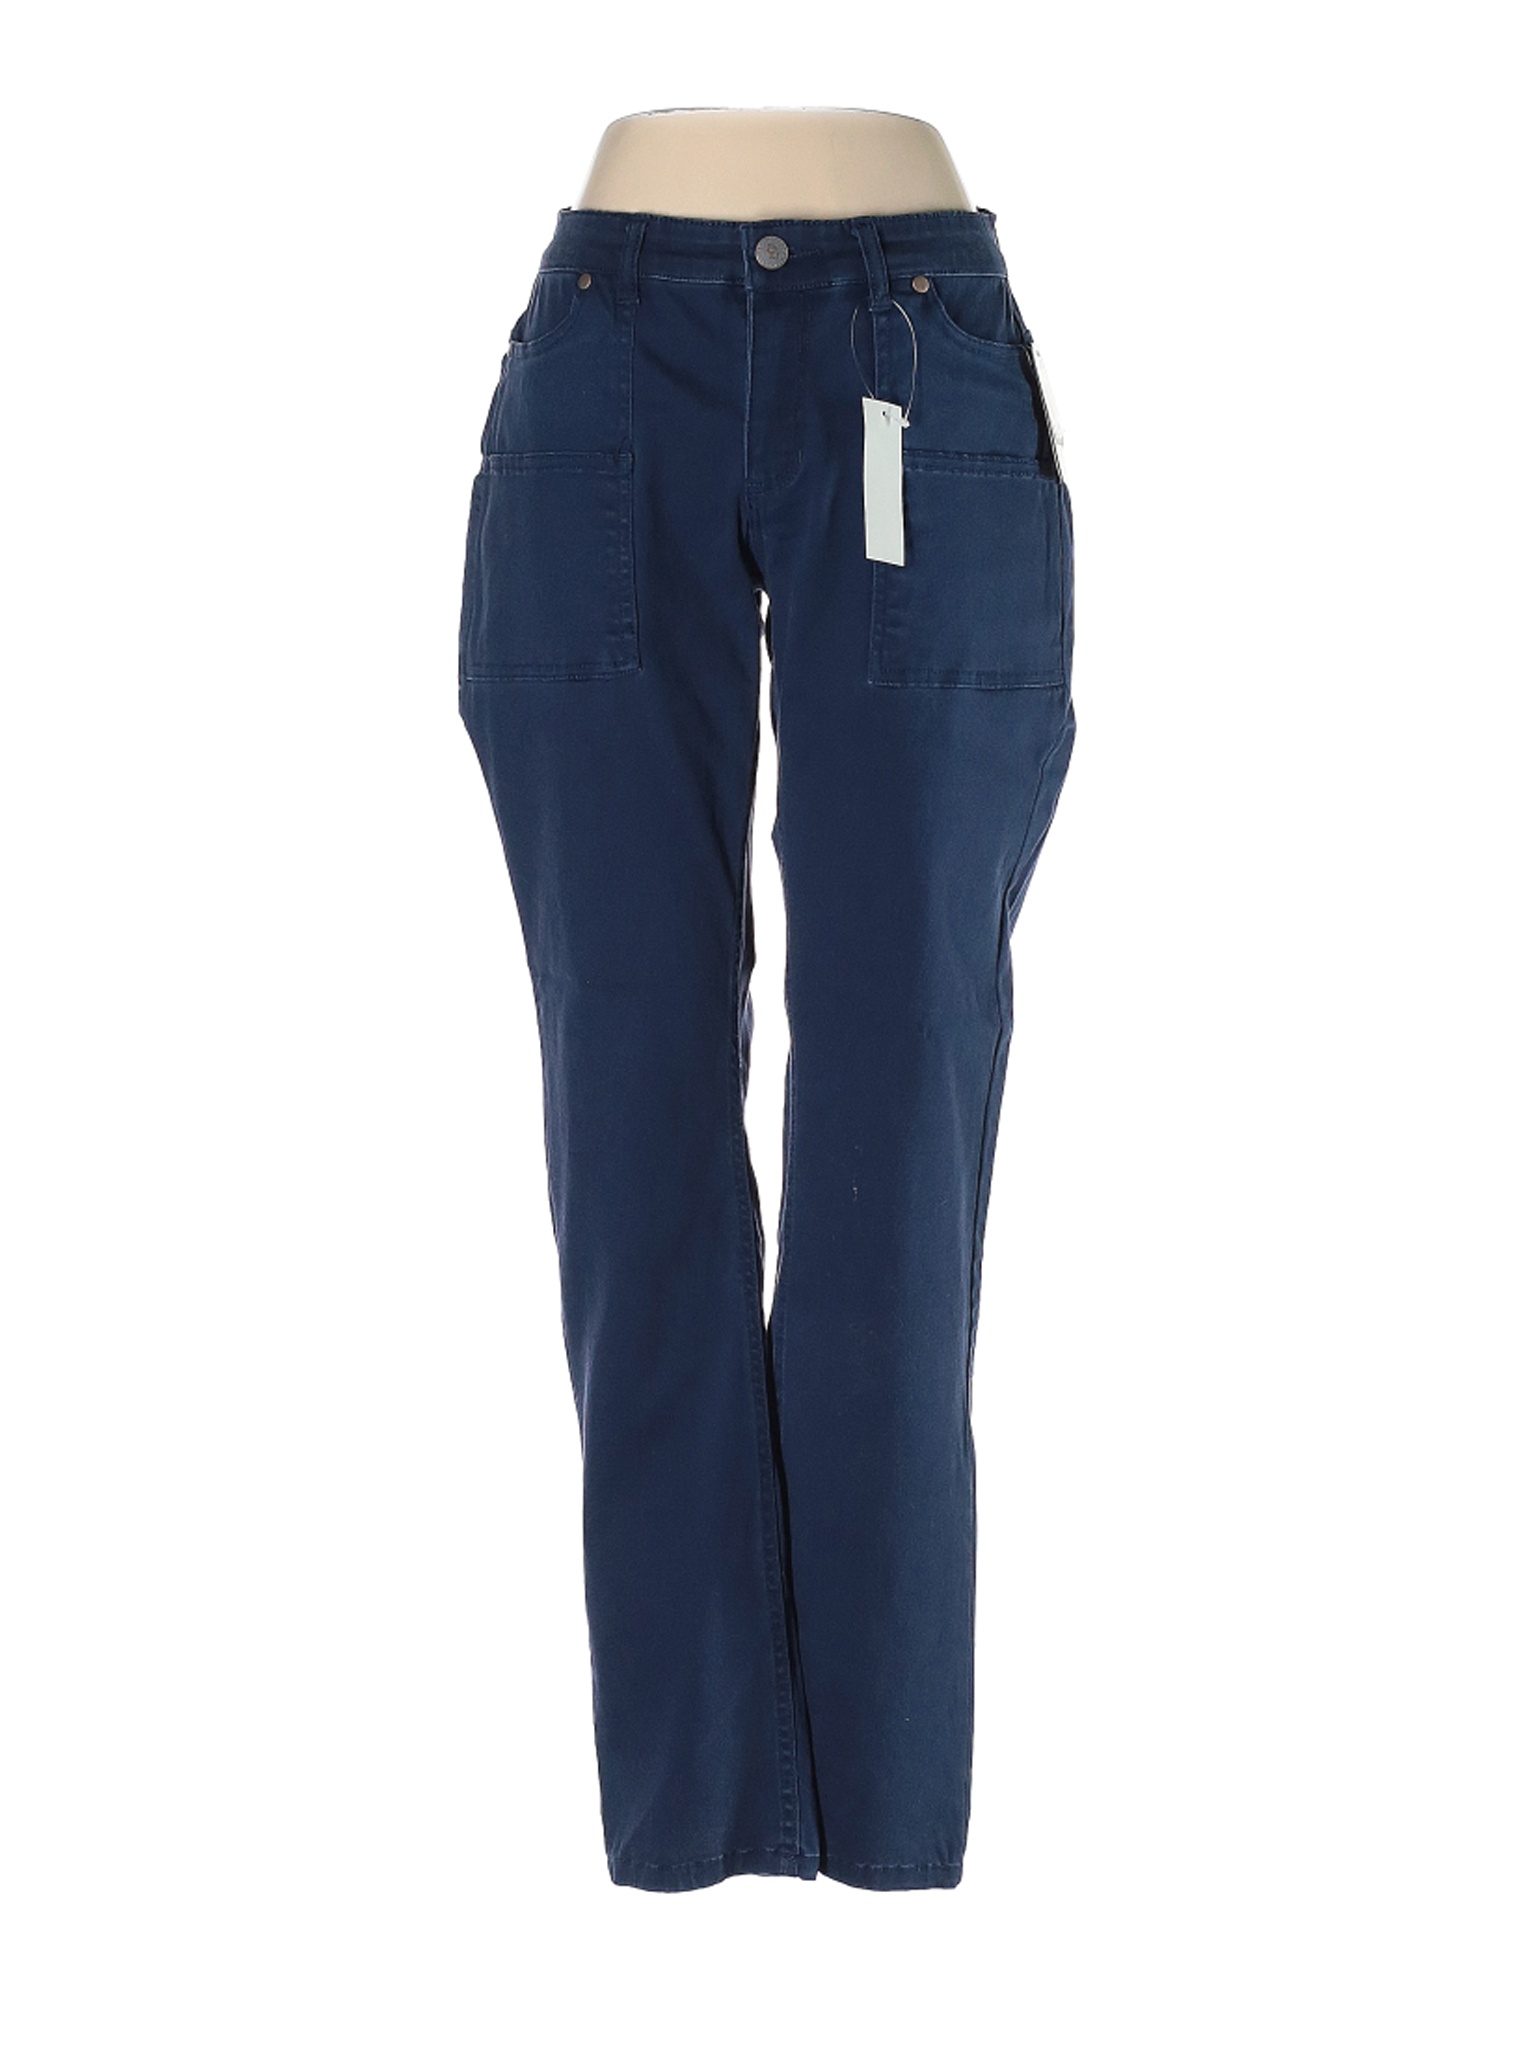 NWT Bit & Bridle Women Blue Cargo Pants 4 | eBay